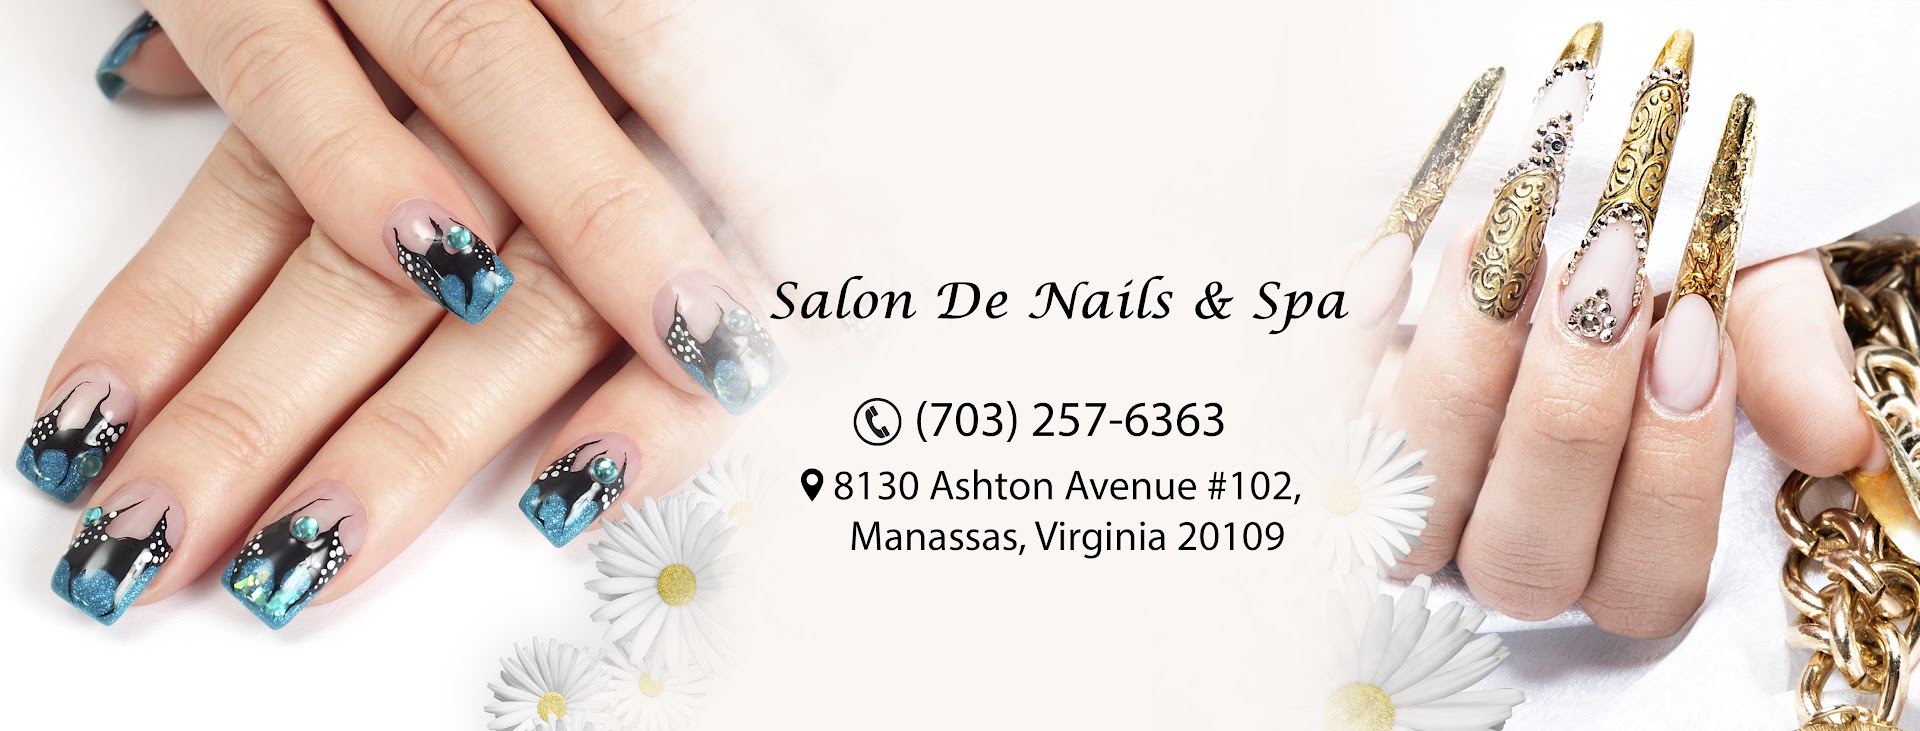 Salon De Nails & Spa